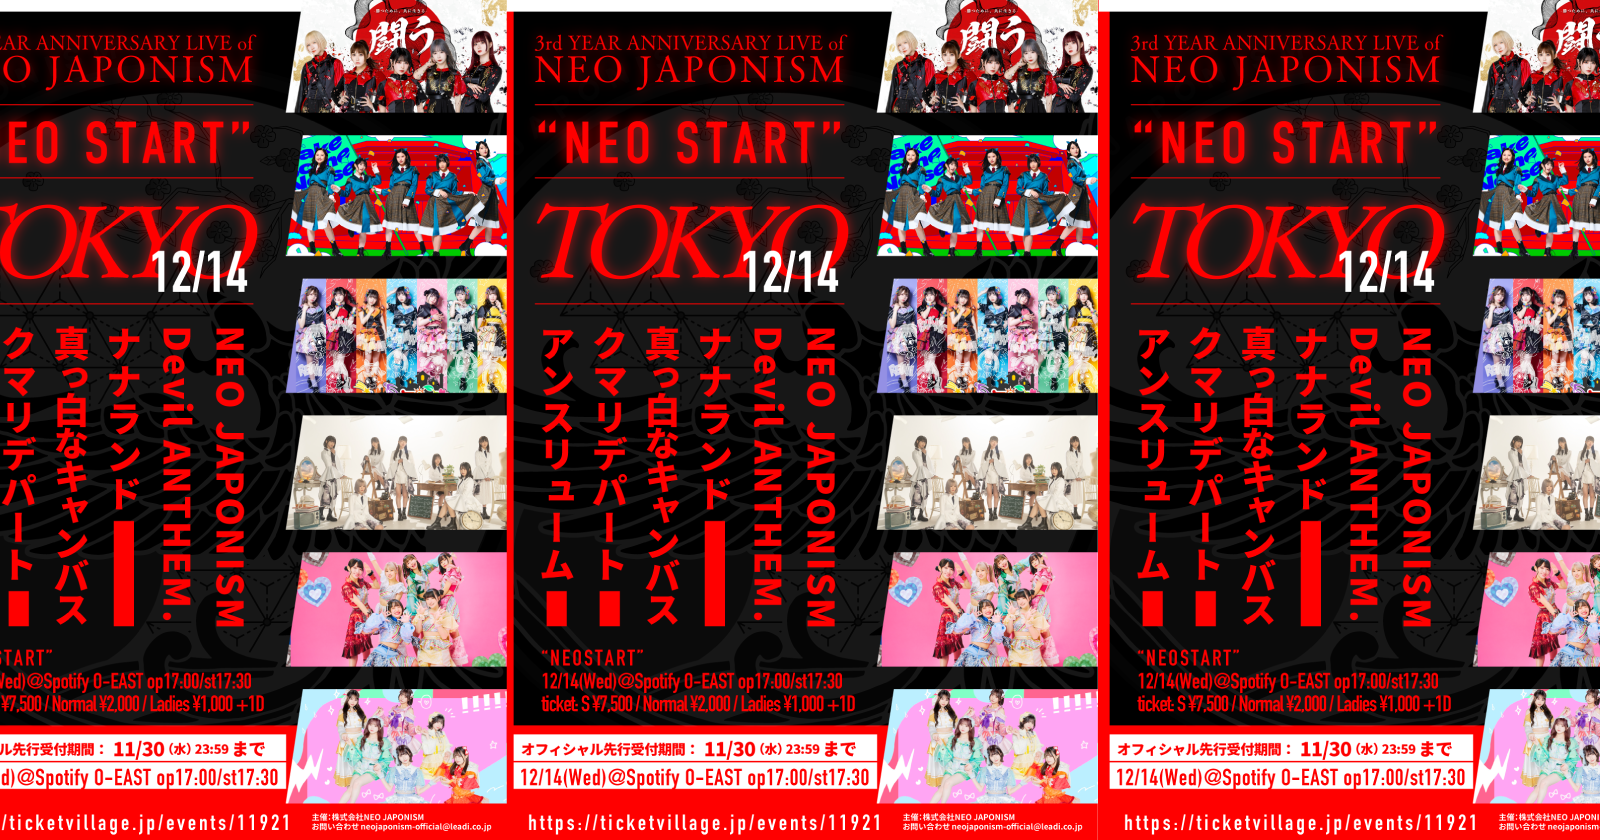 NEO JAPONISM 3周年公演 “NEO START”